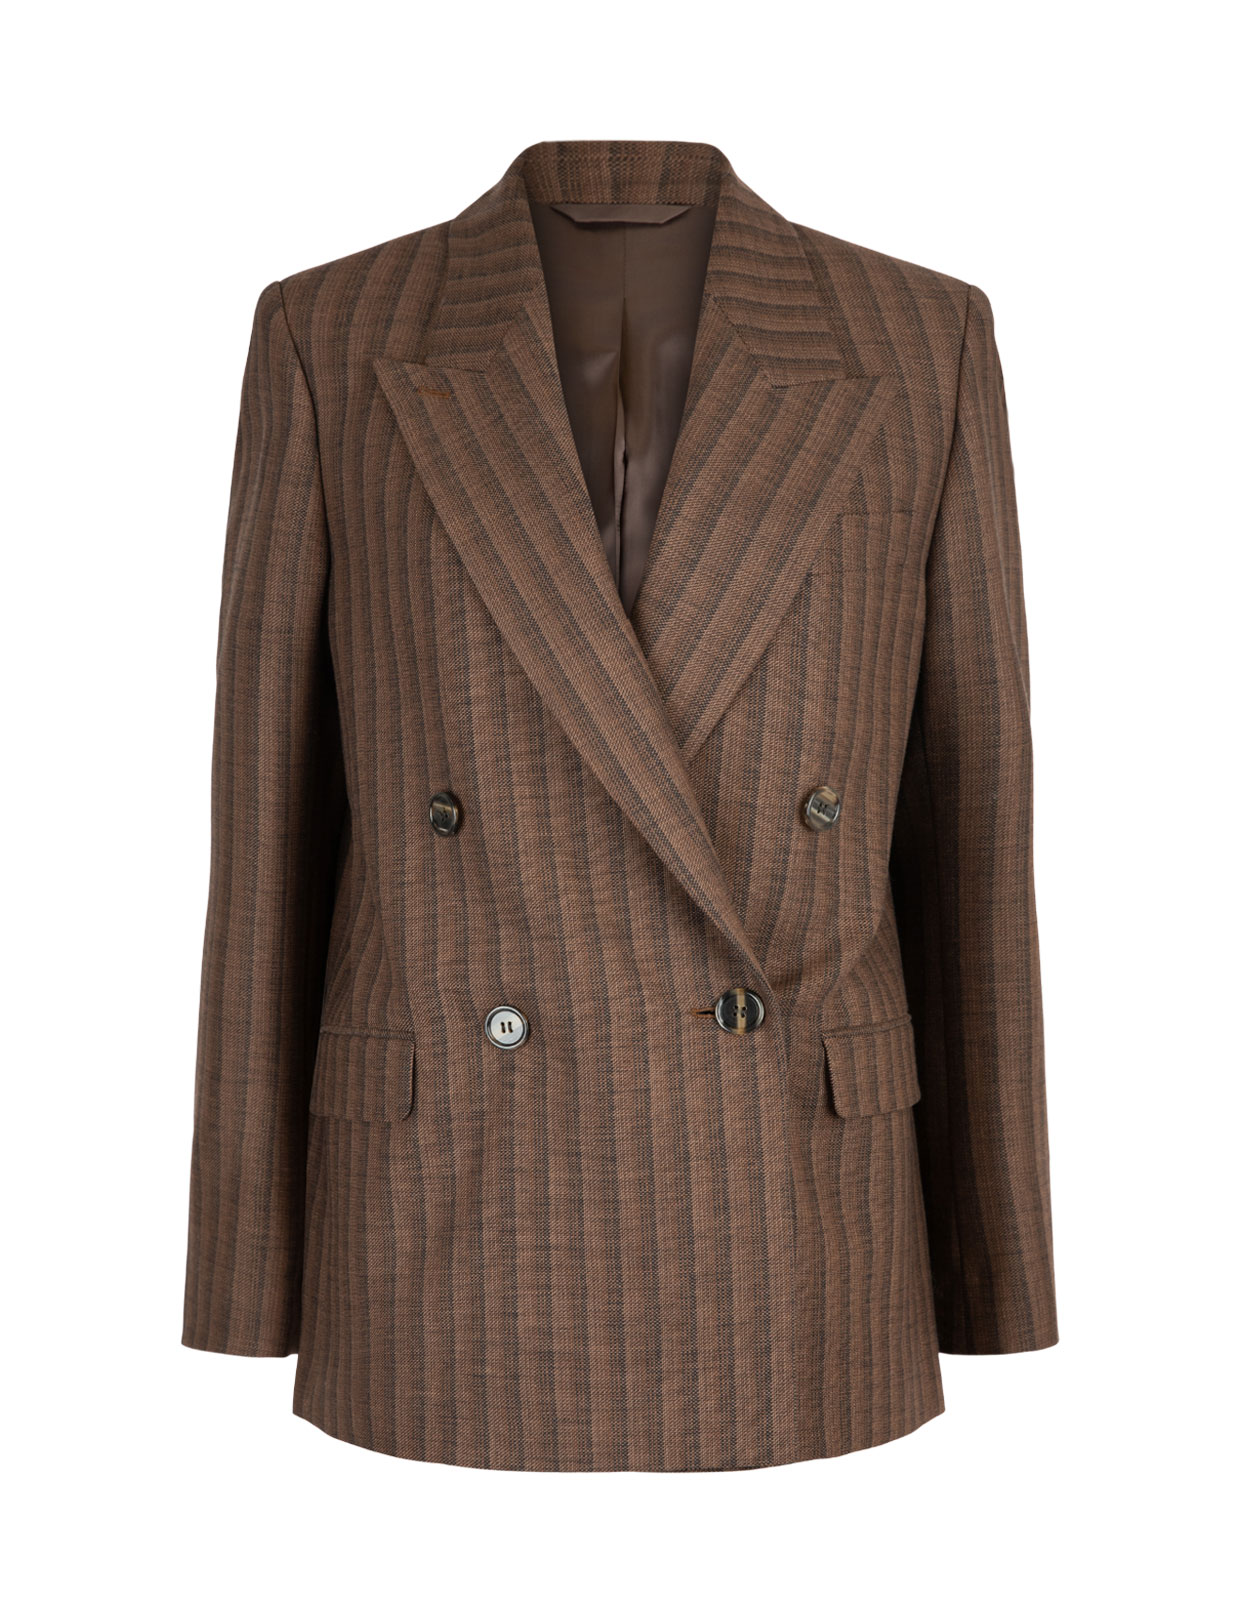 Suit Jacket Striped Brown/Black